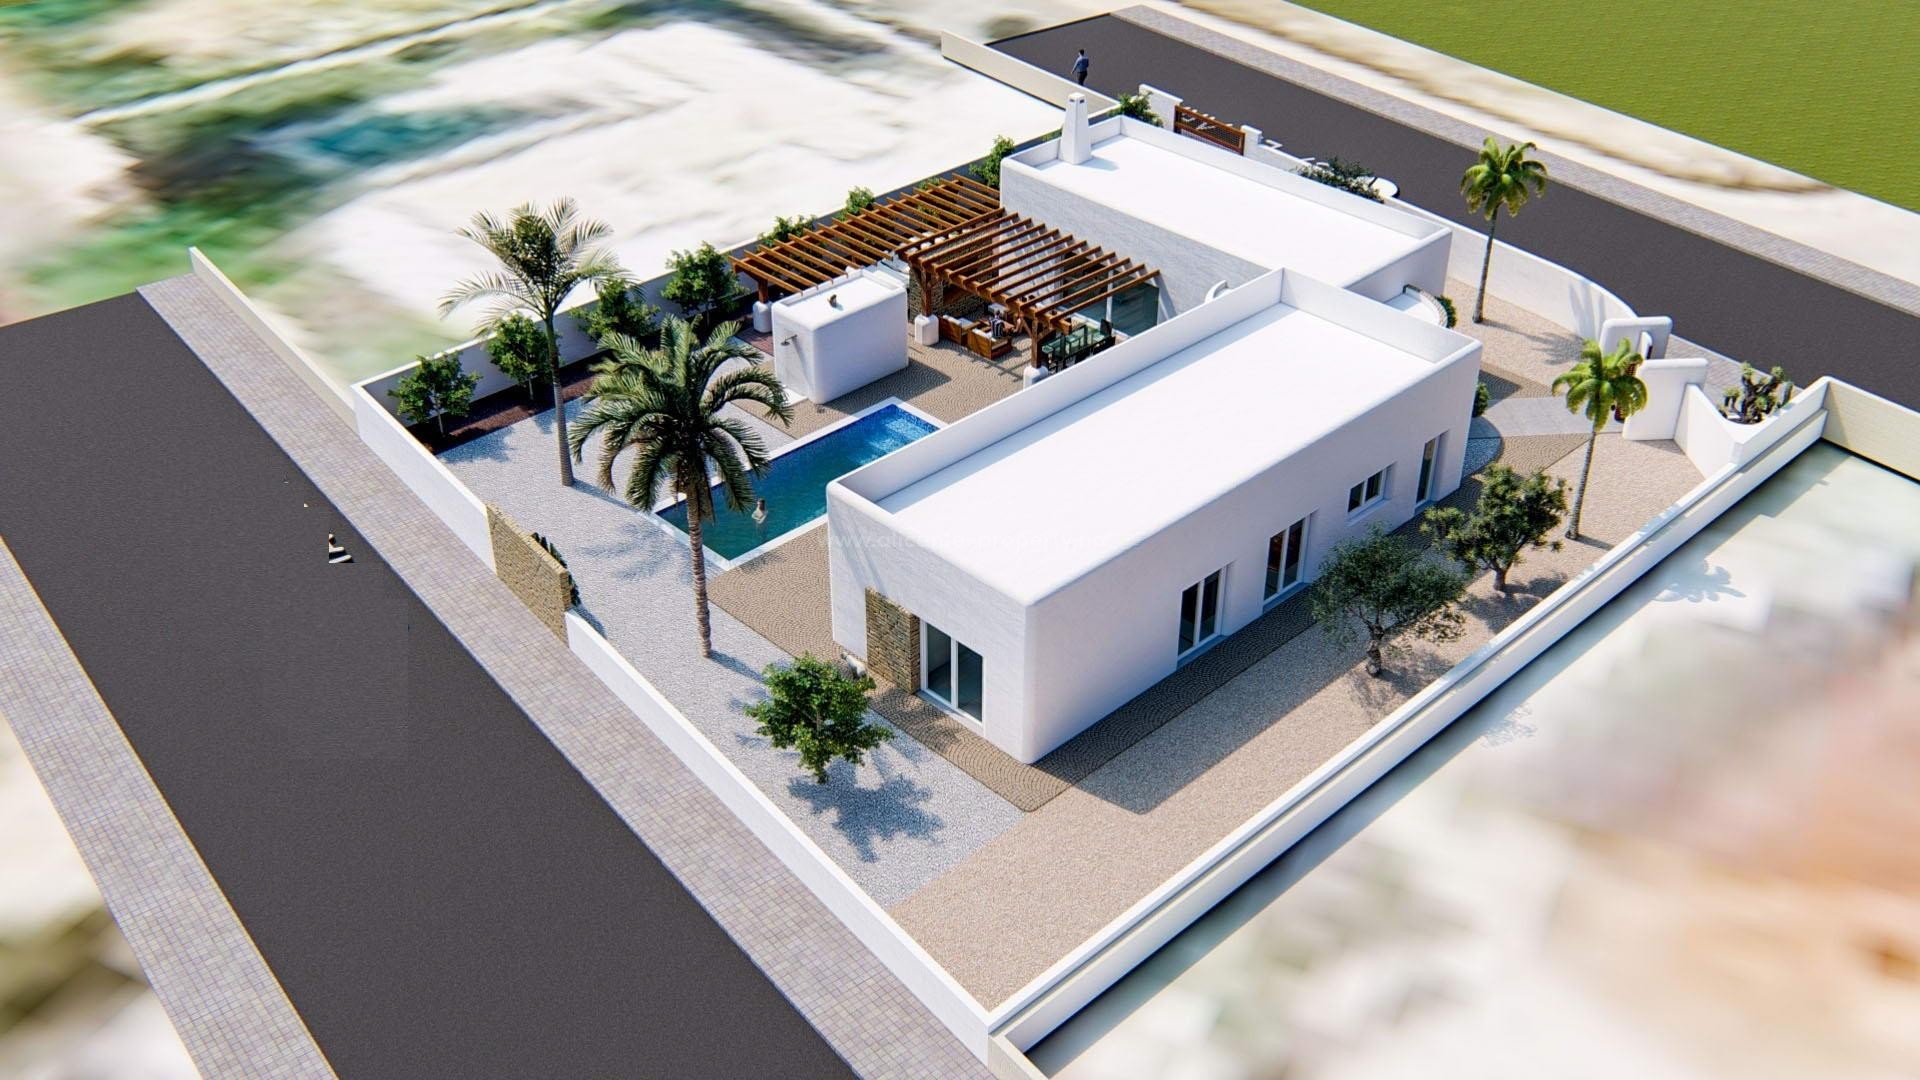 Eksklusive hus/villa i Ibiza-stil i Alfaz del Pi, 4 soverom, 2 bad, stor terrassen med bassengområdet mot sør.